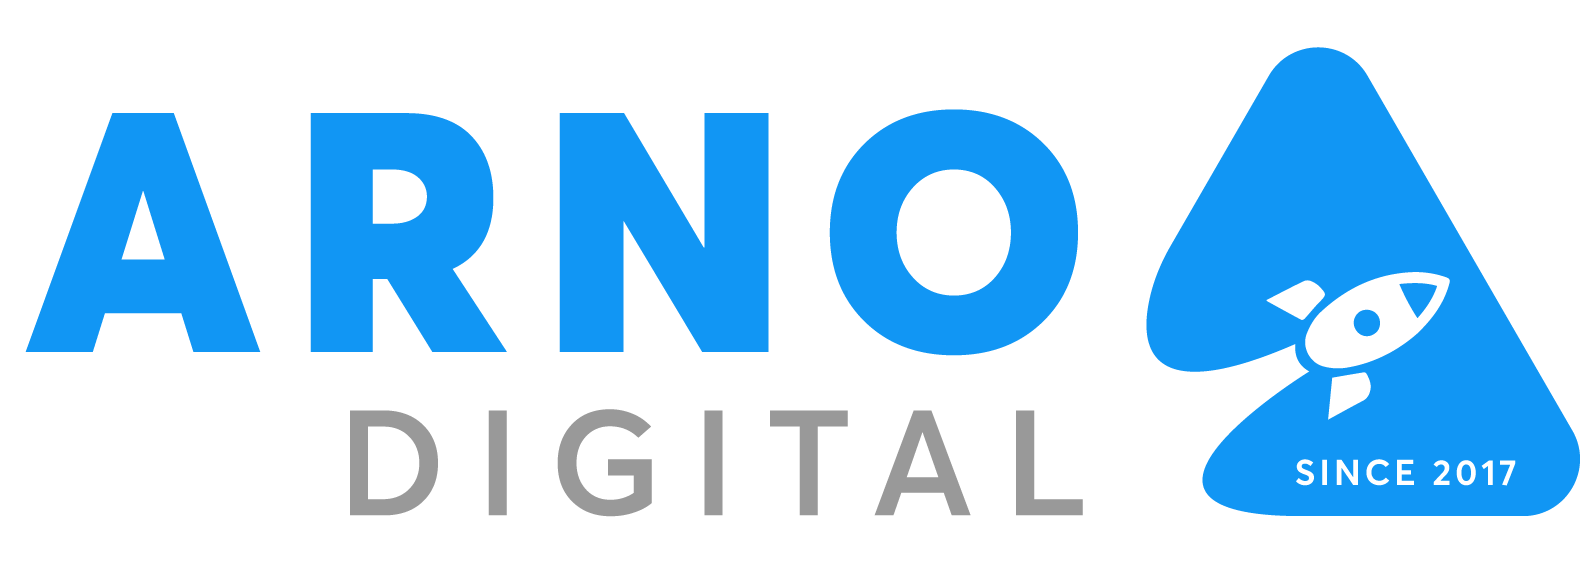 ARNO digital